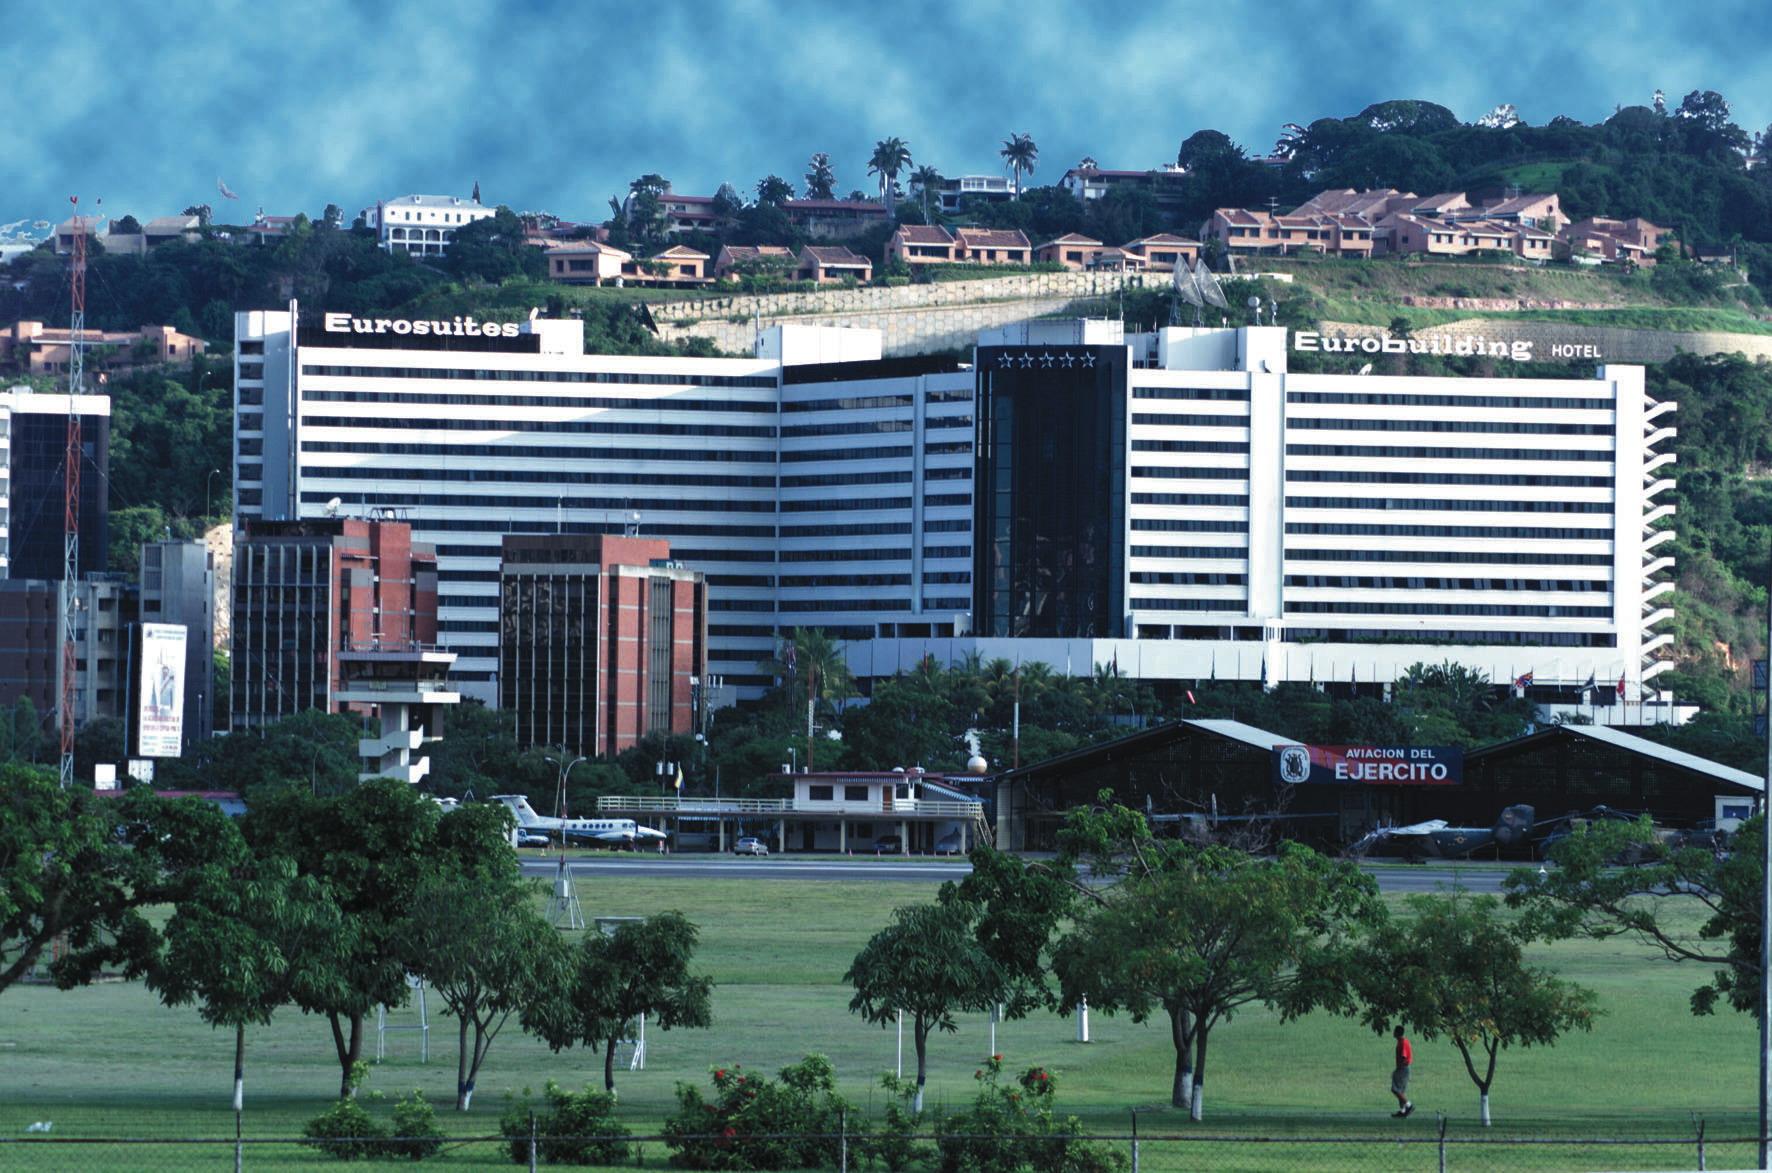 Eurobuilding Hotel And Suites in Caracas, Venezuela